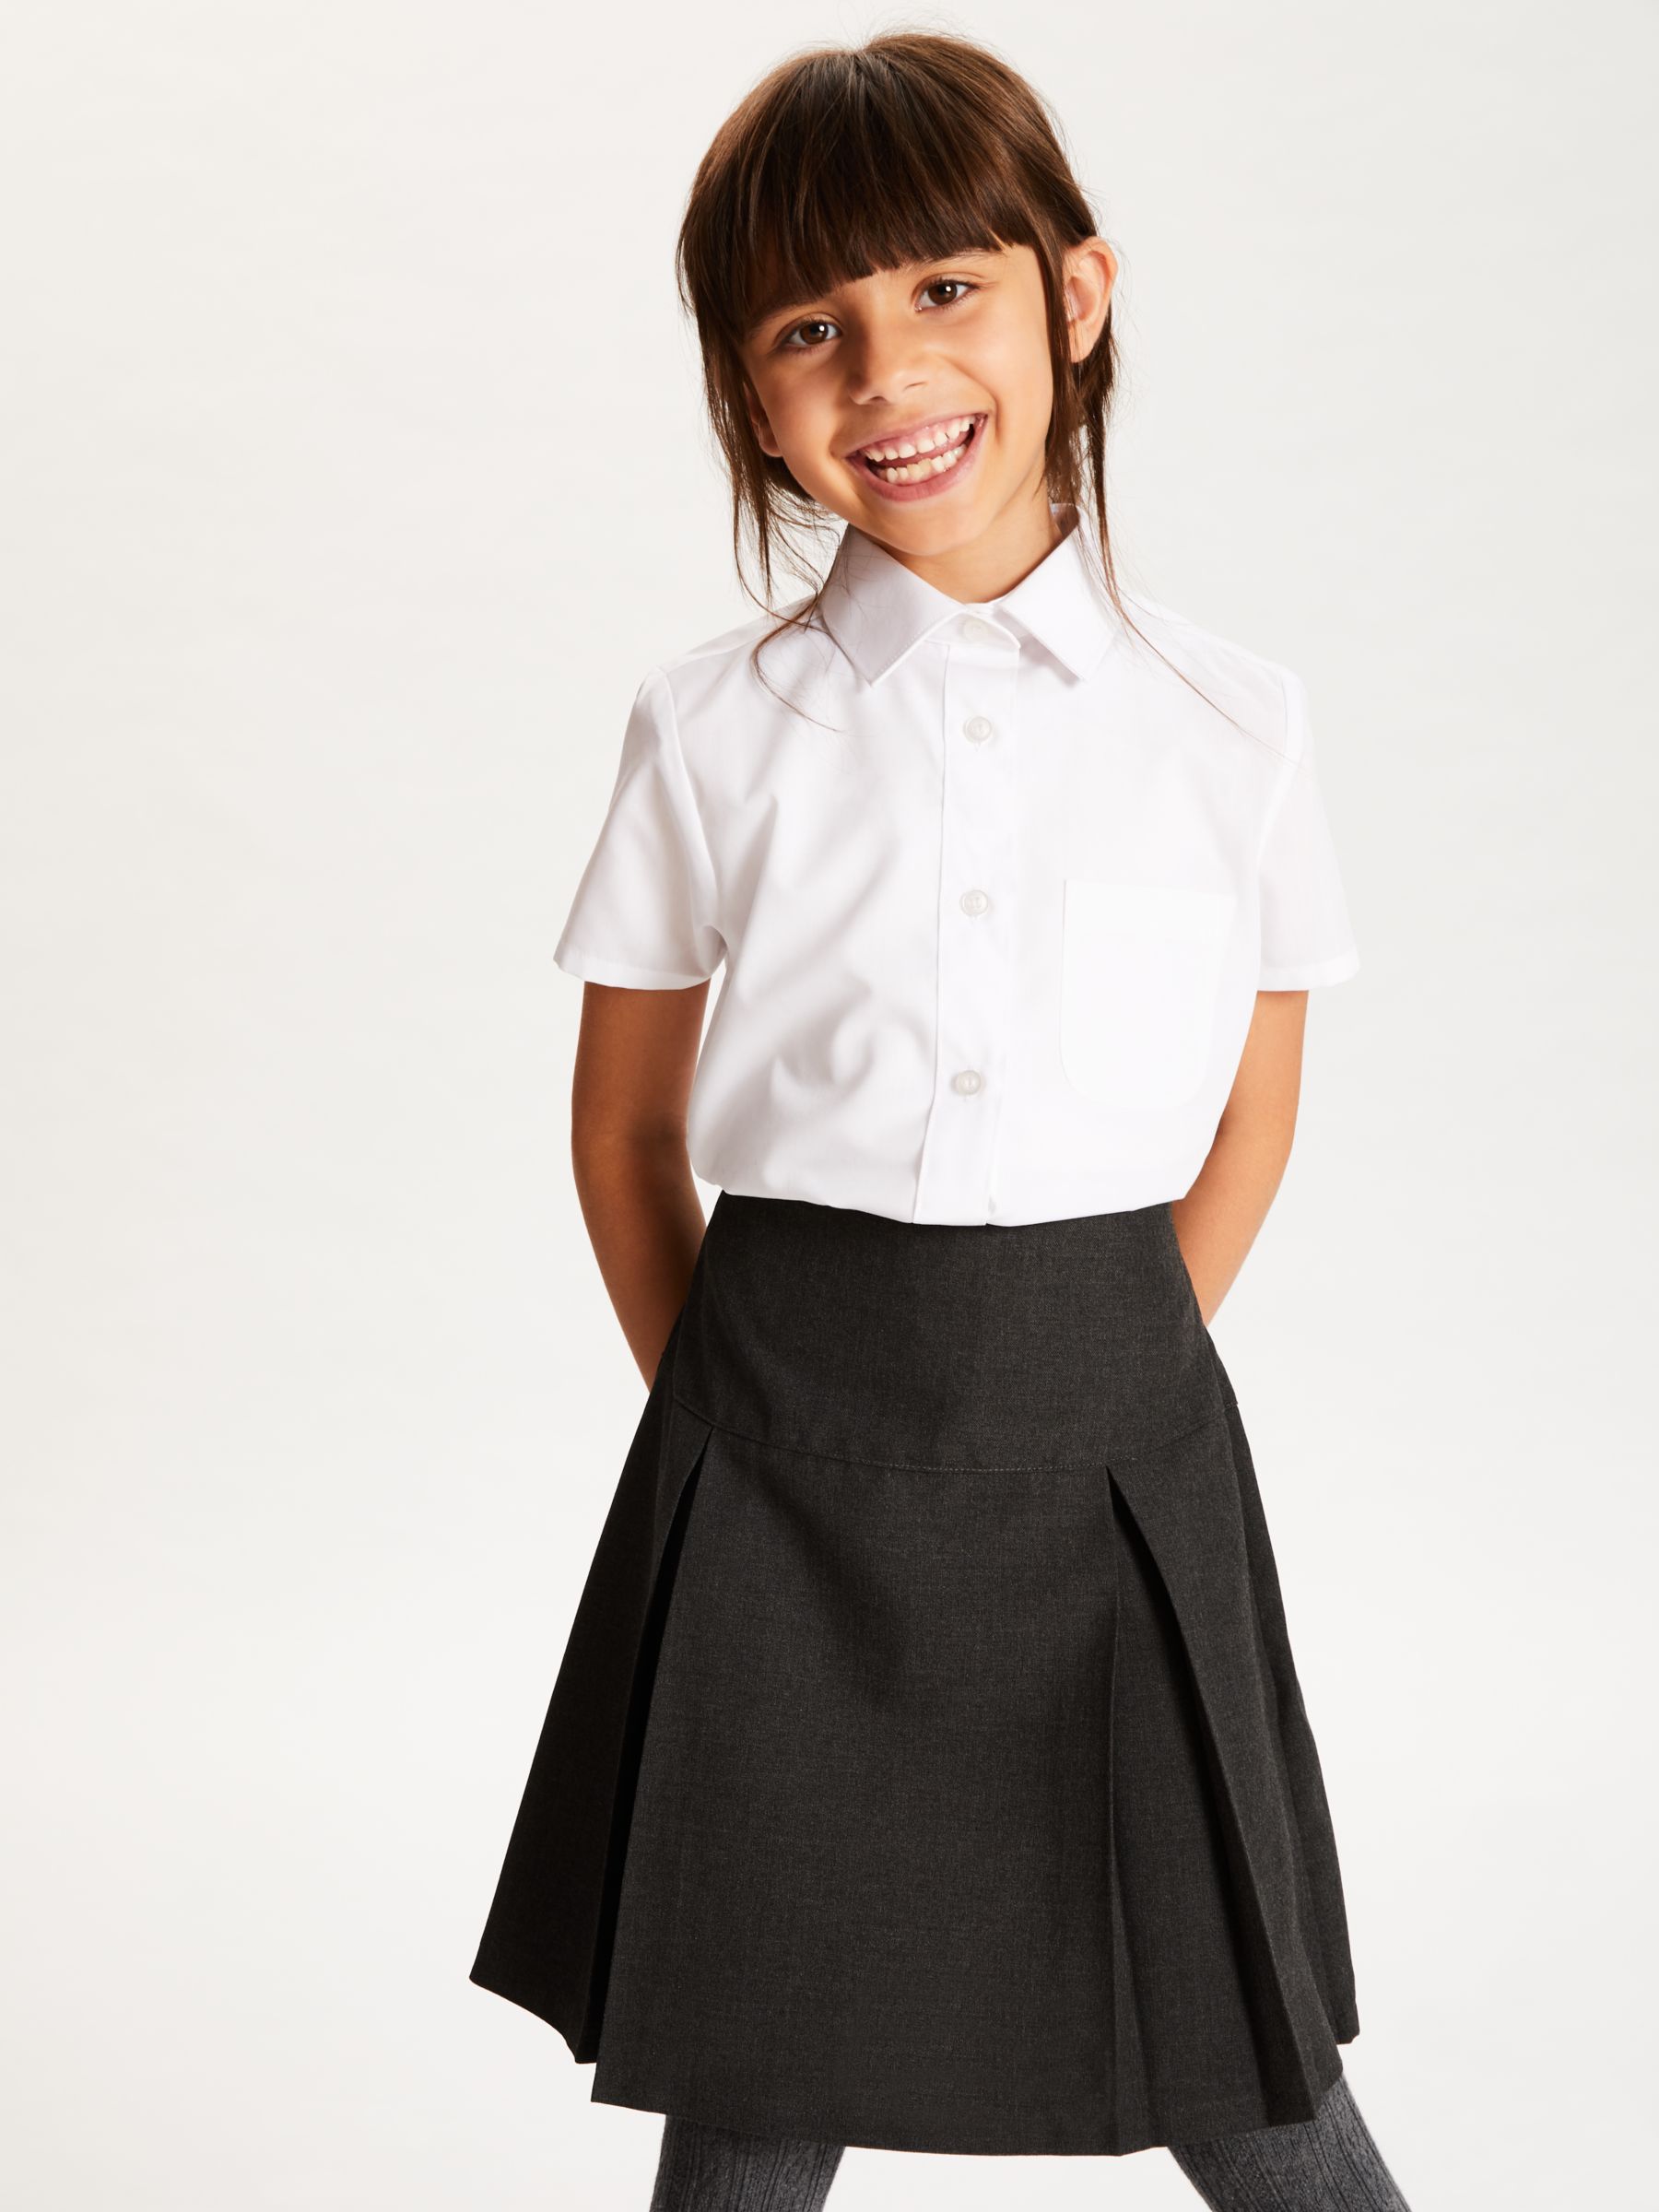 Back to school uniform blouses women